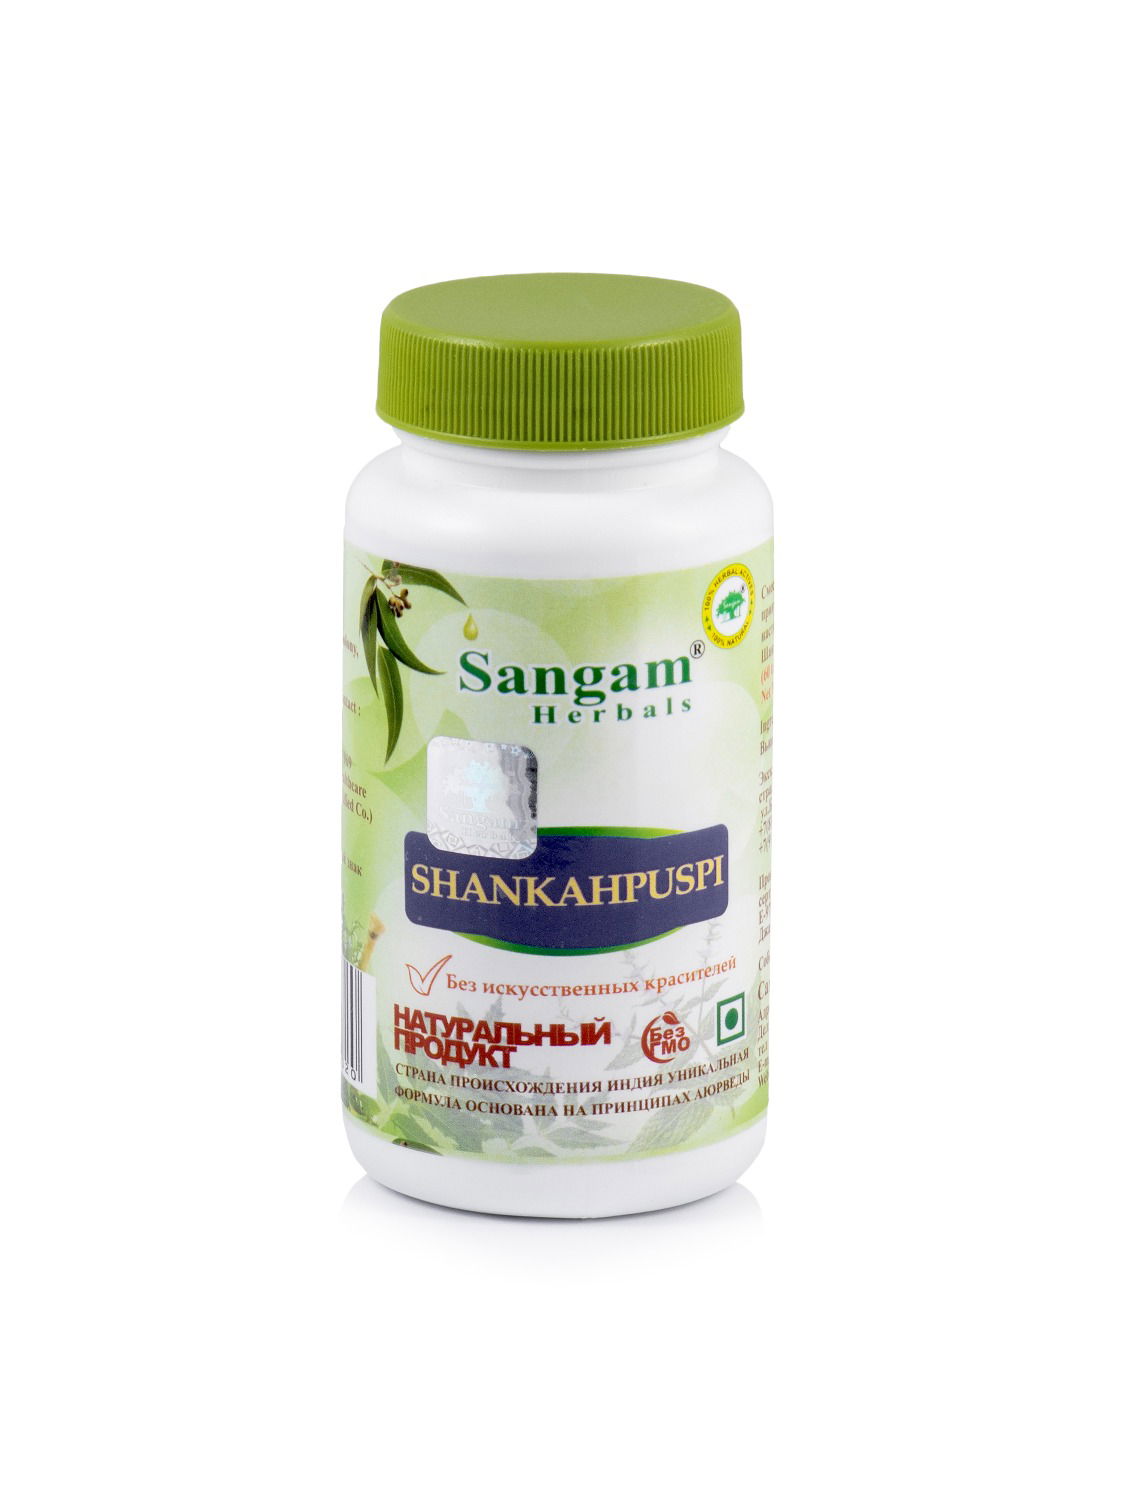 Шанкхапушпи Sangam Herbals (60 таблеток). 